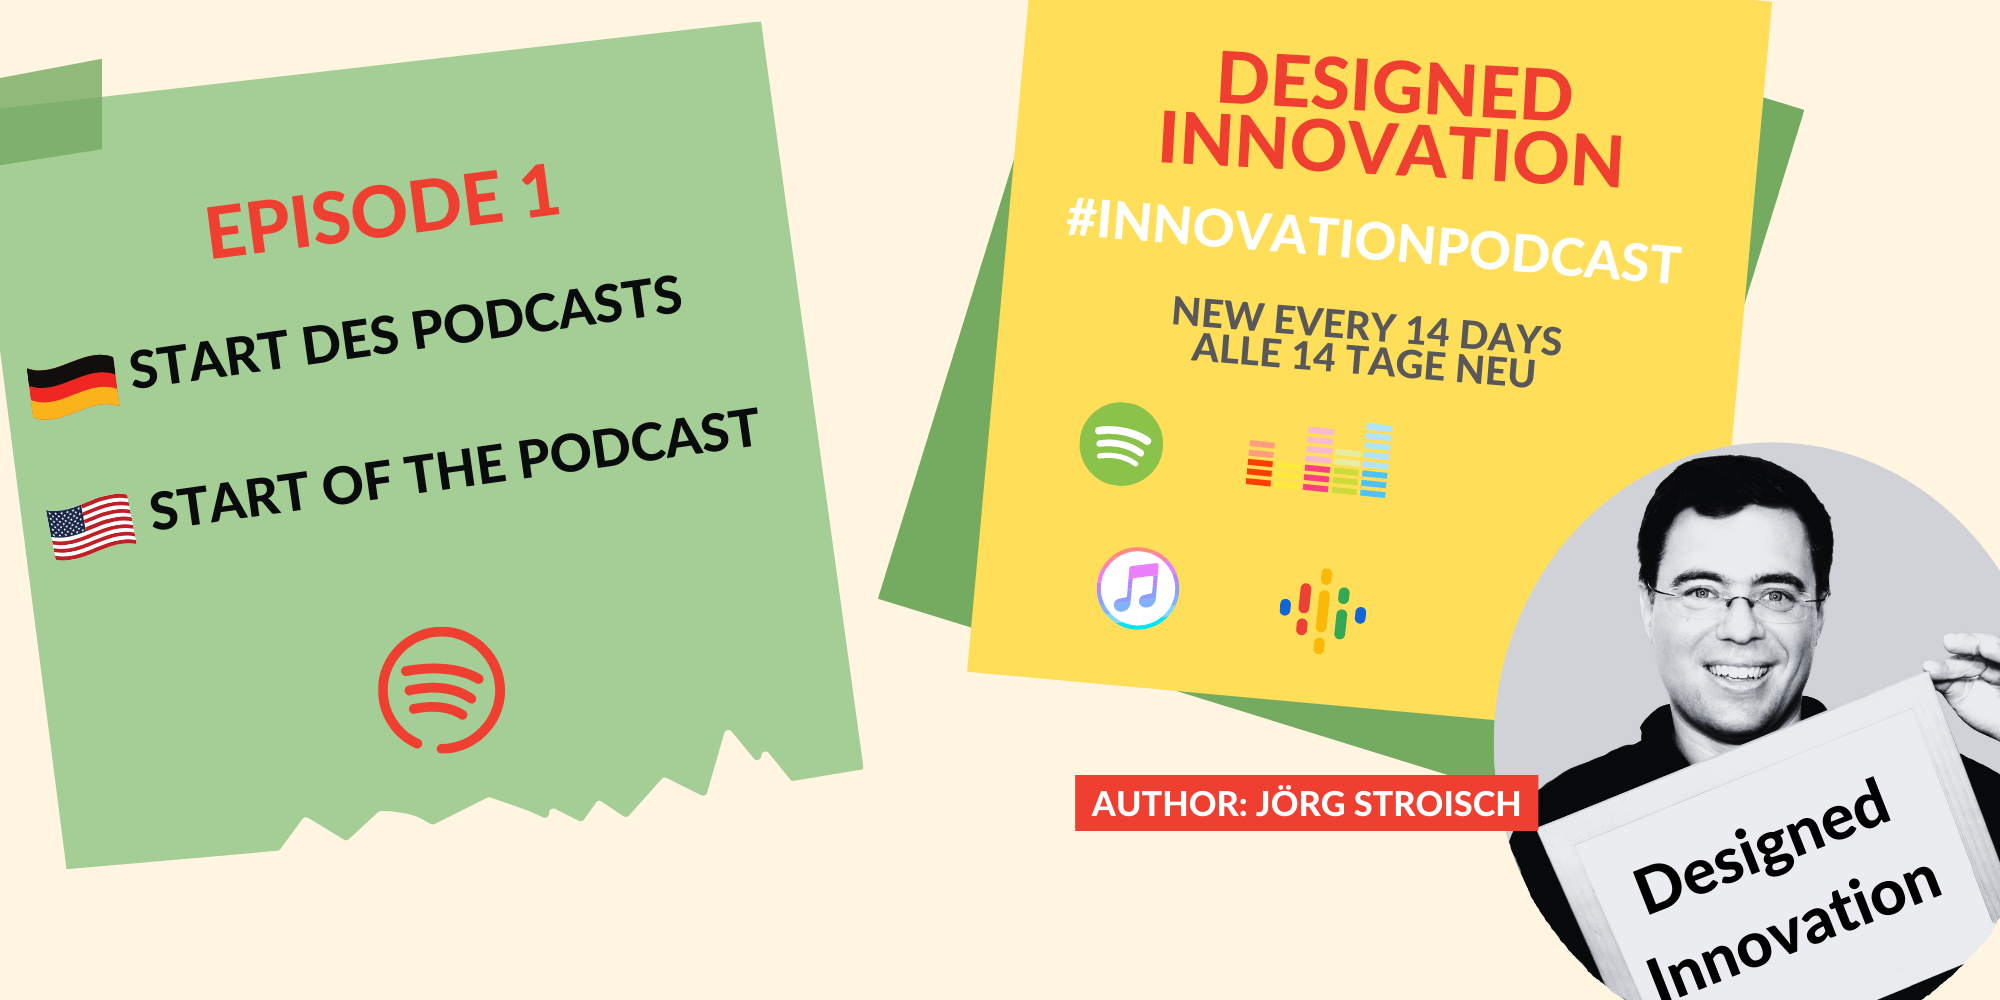 The ne podcast "Designed Innovation" starts.